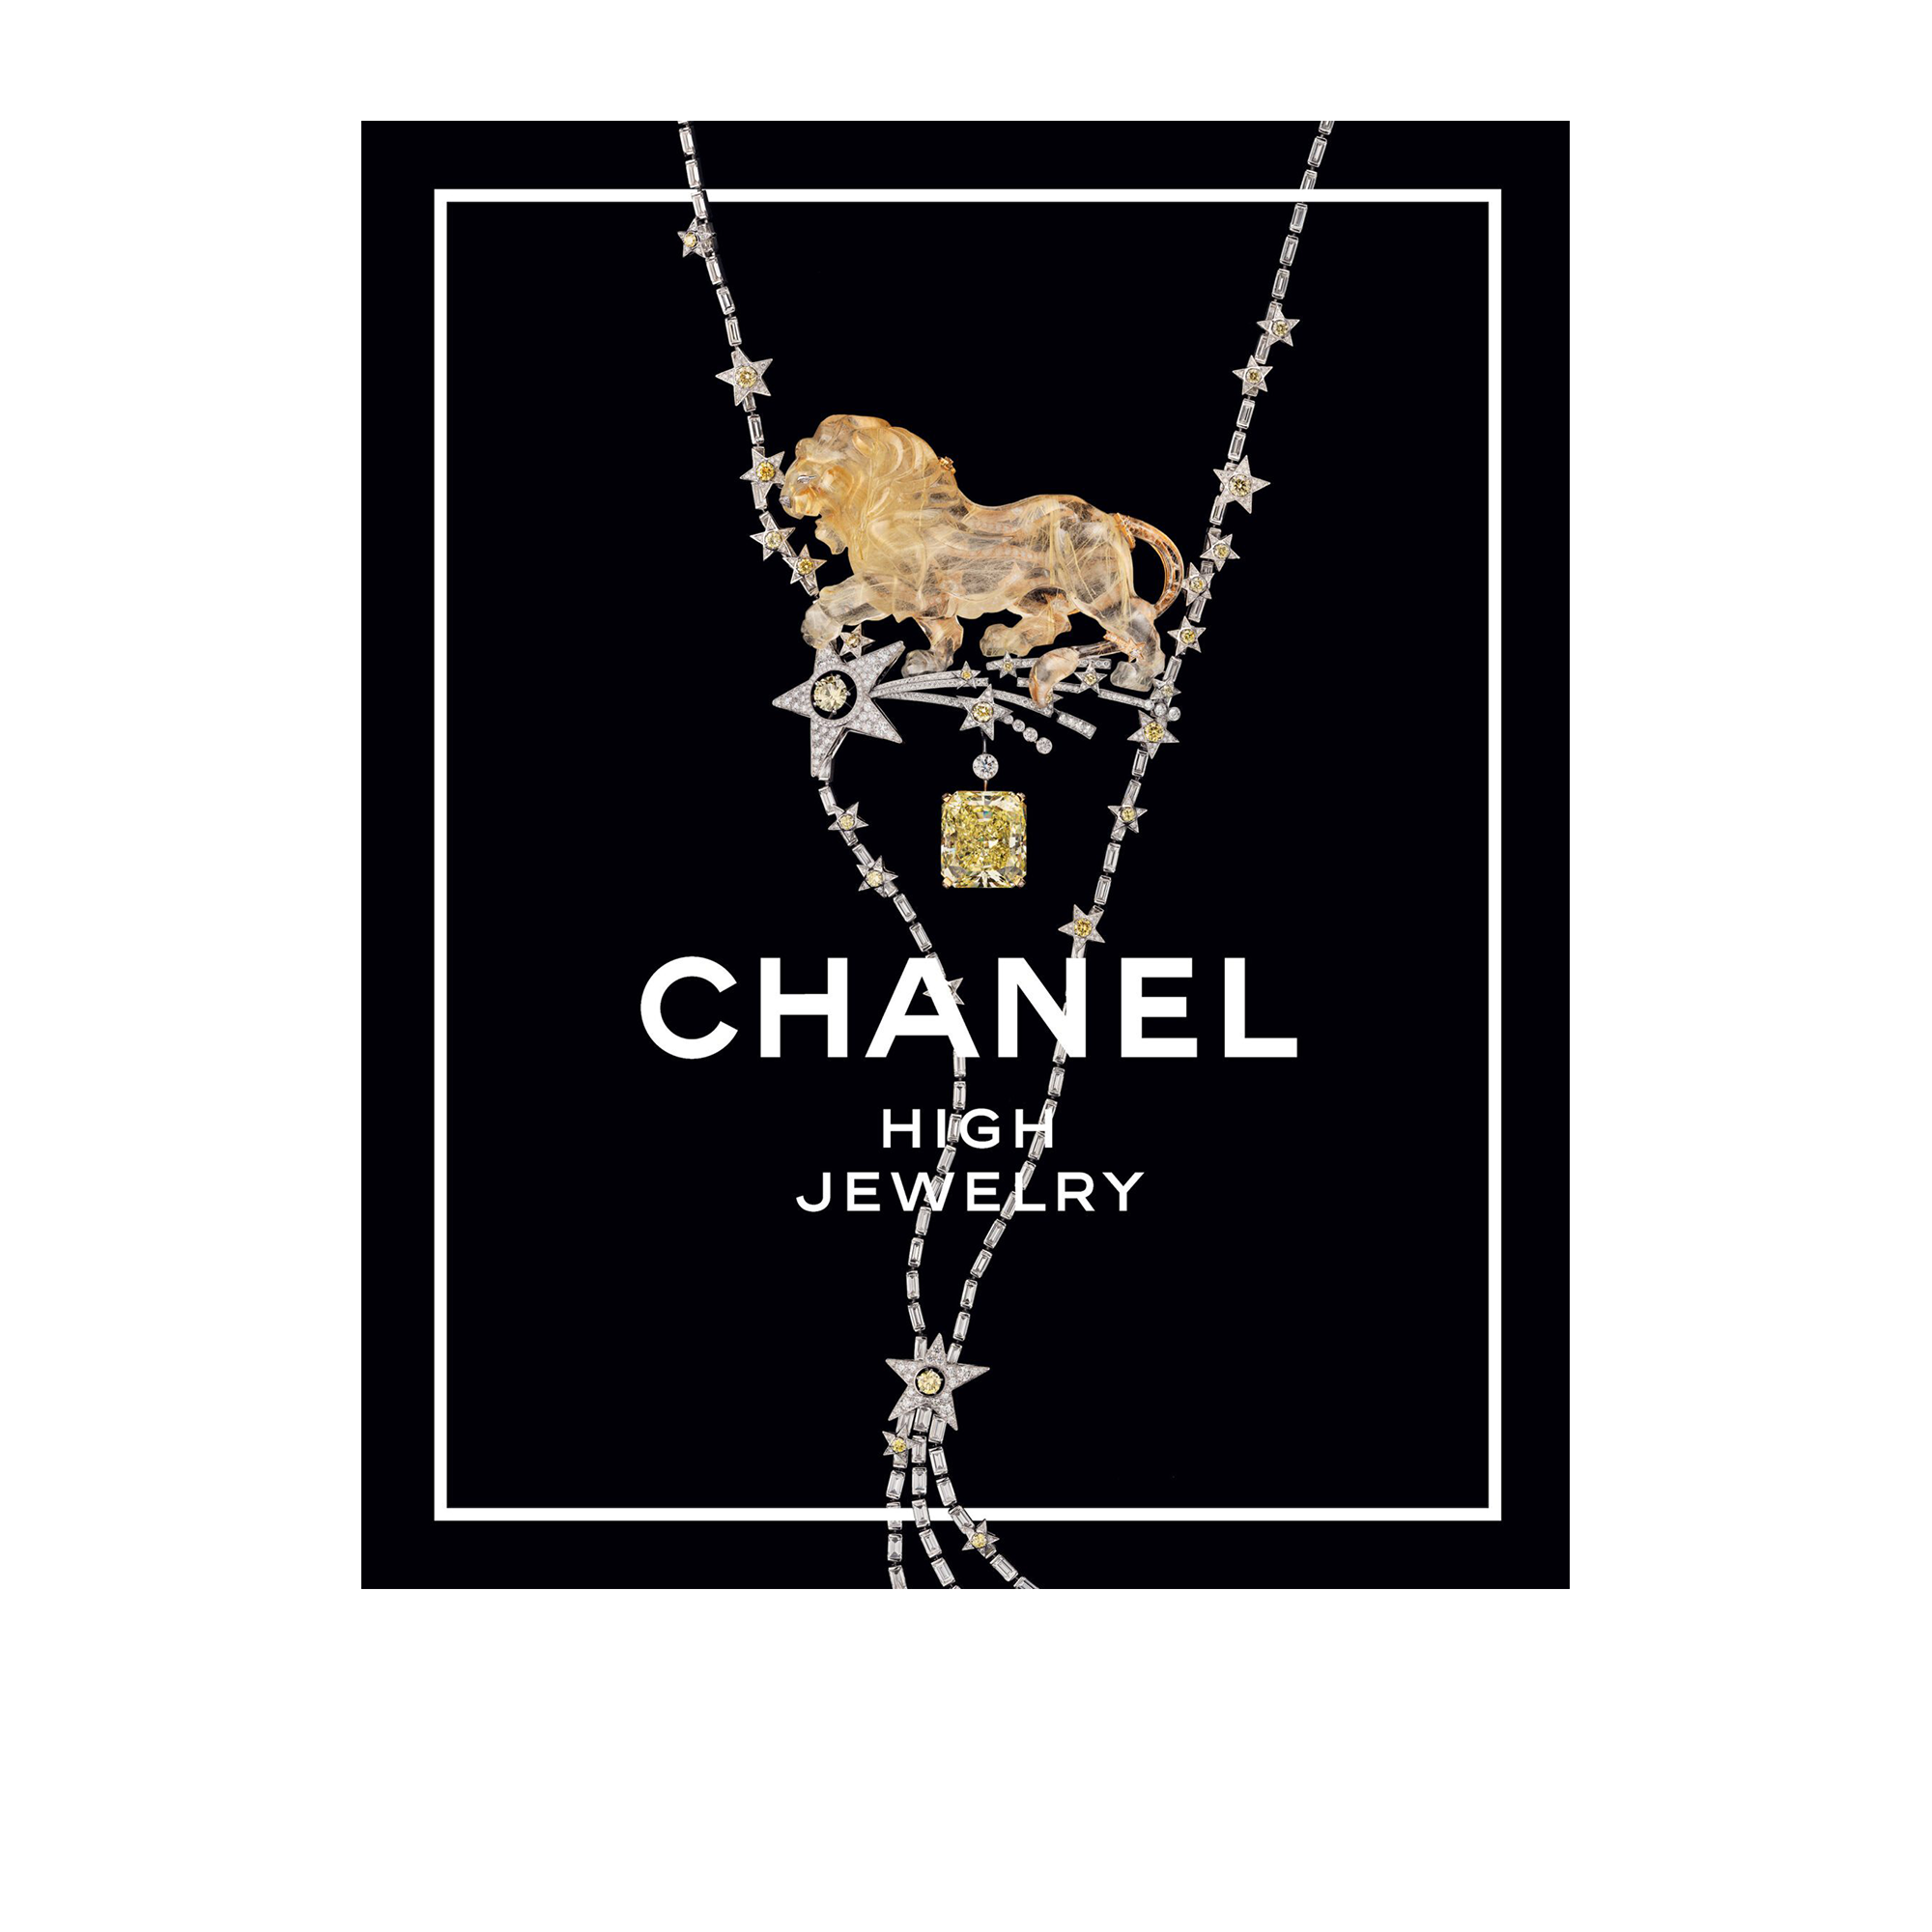 Chanel High Jewelery Coffee Table Book